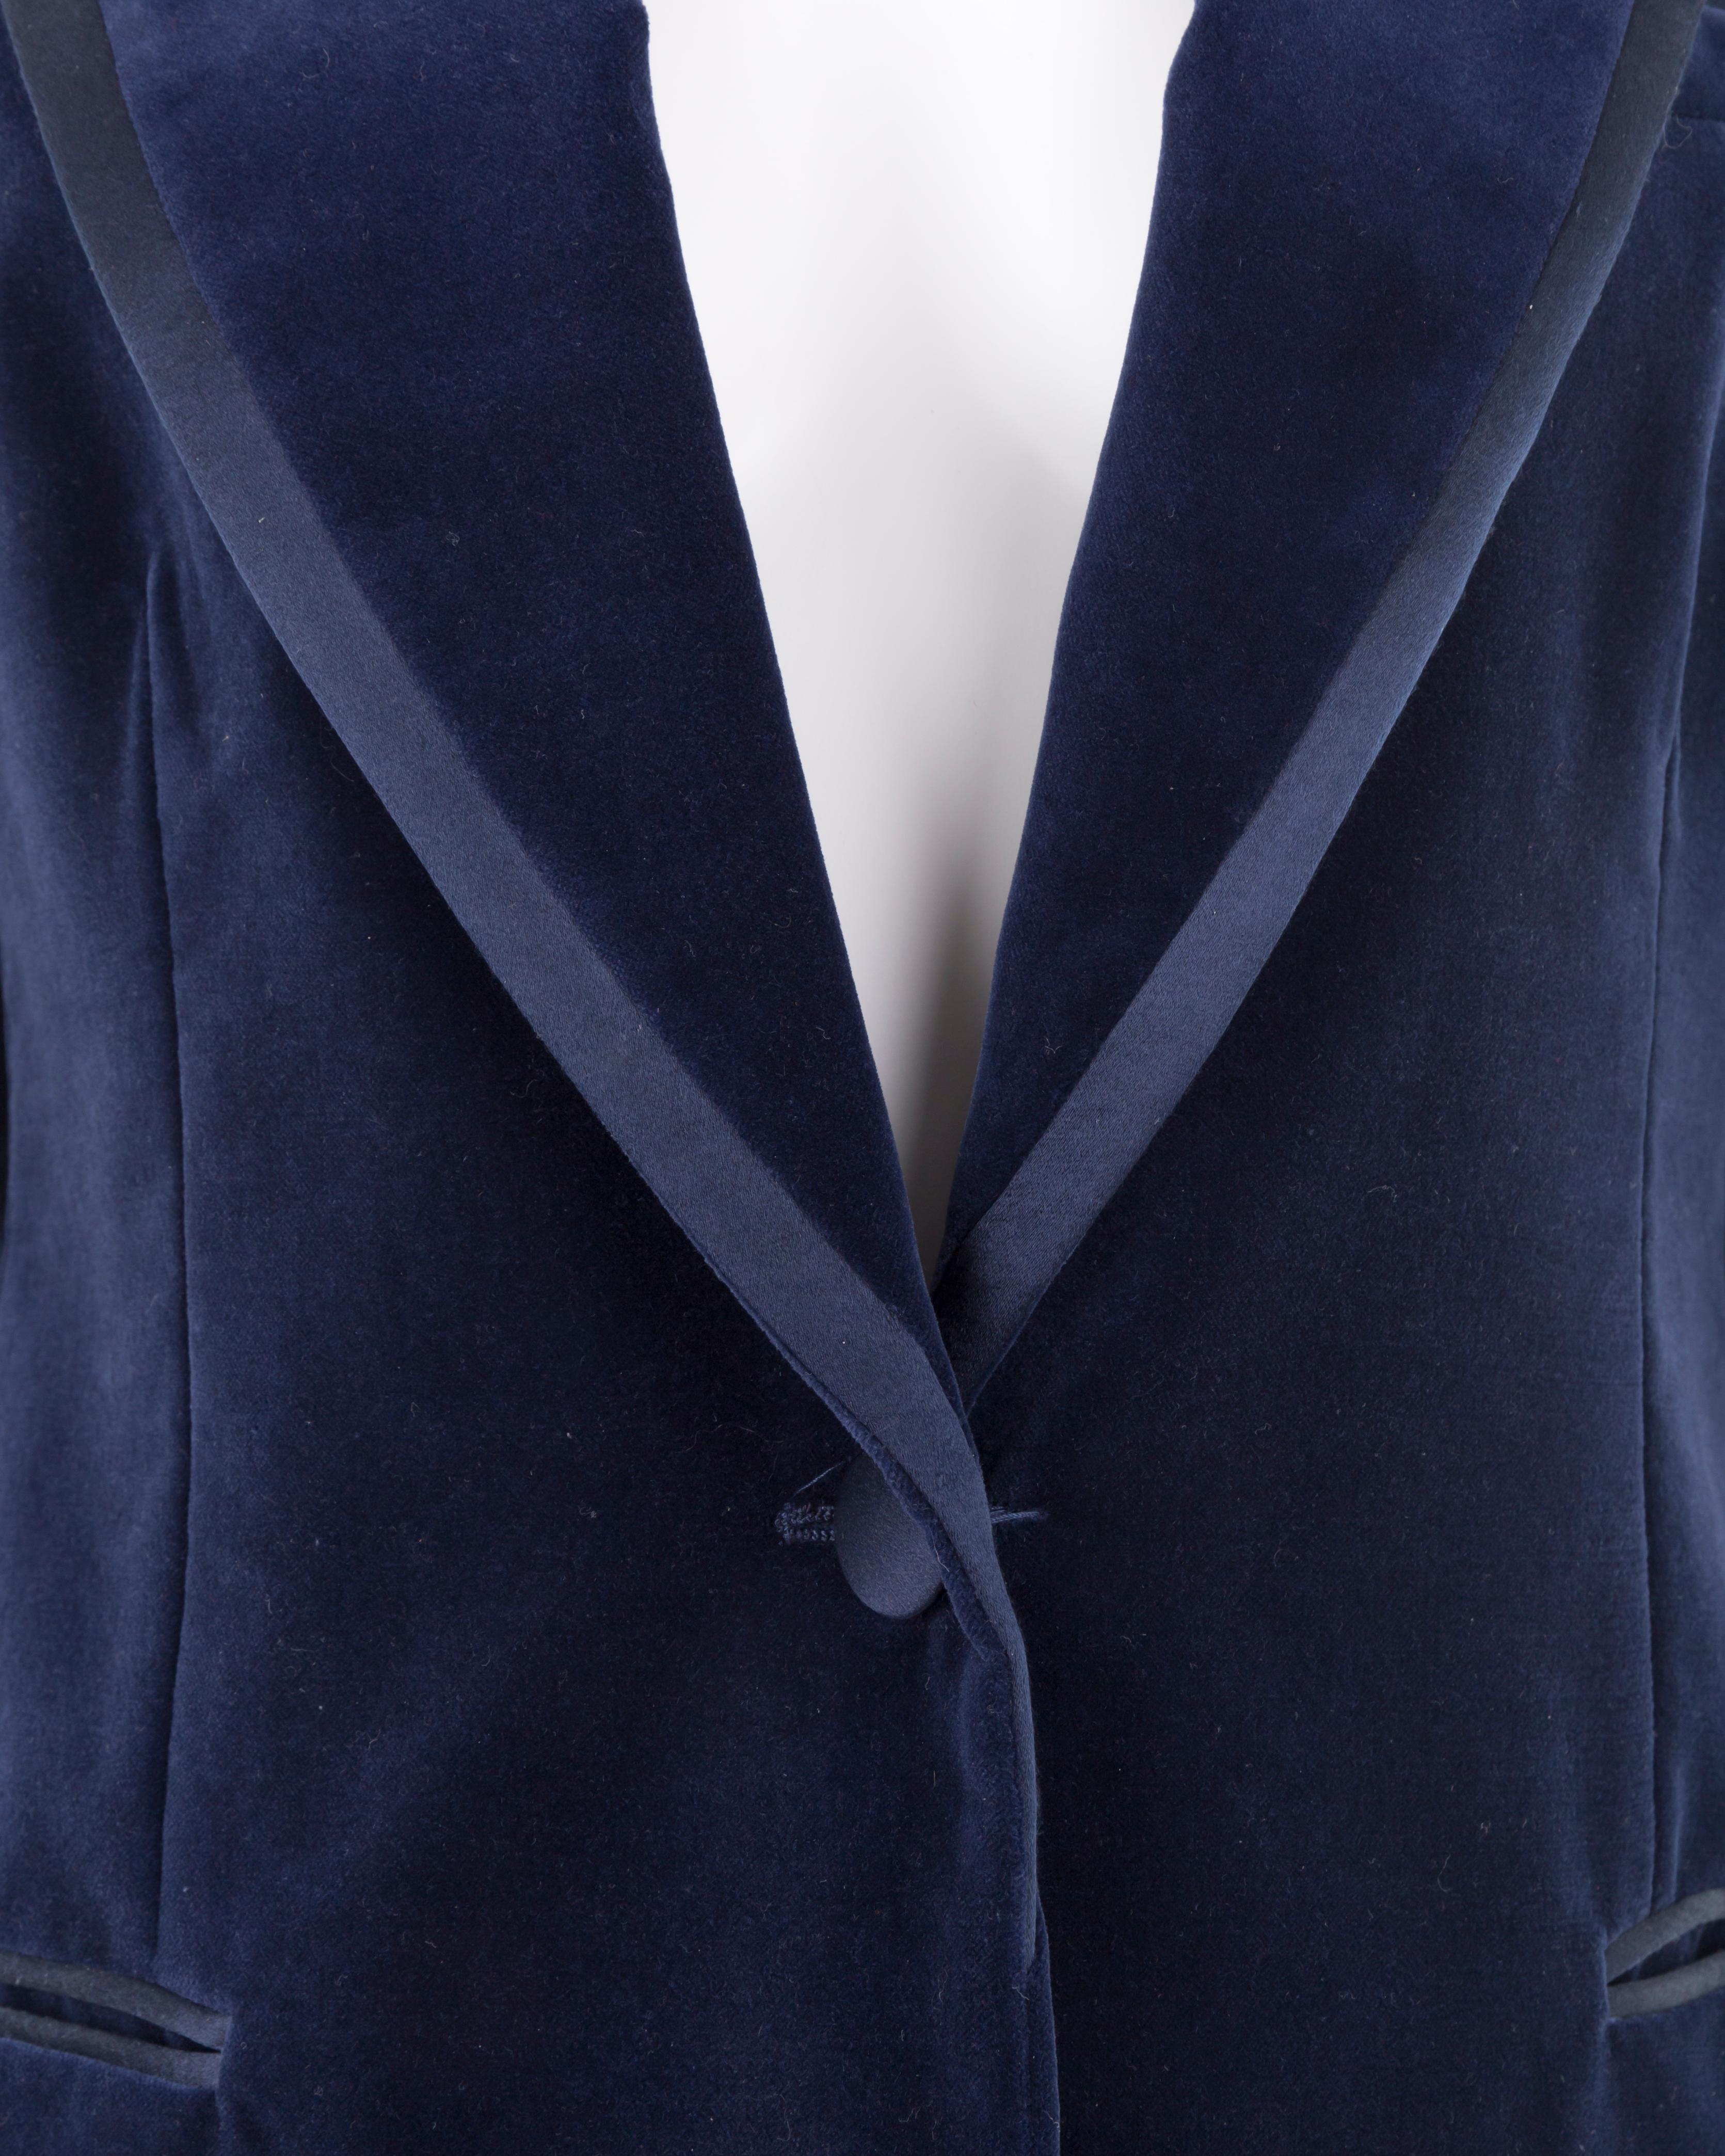 Gucci F/W 1996 blue velvet jacket and pant tuxedo suit 2